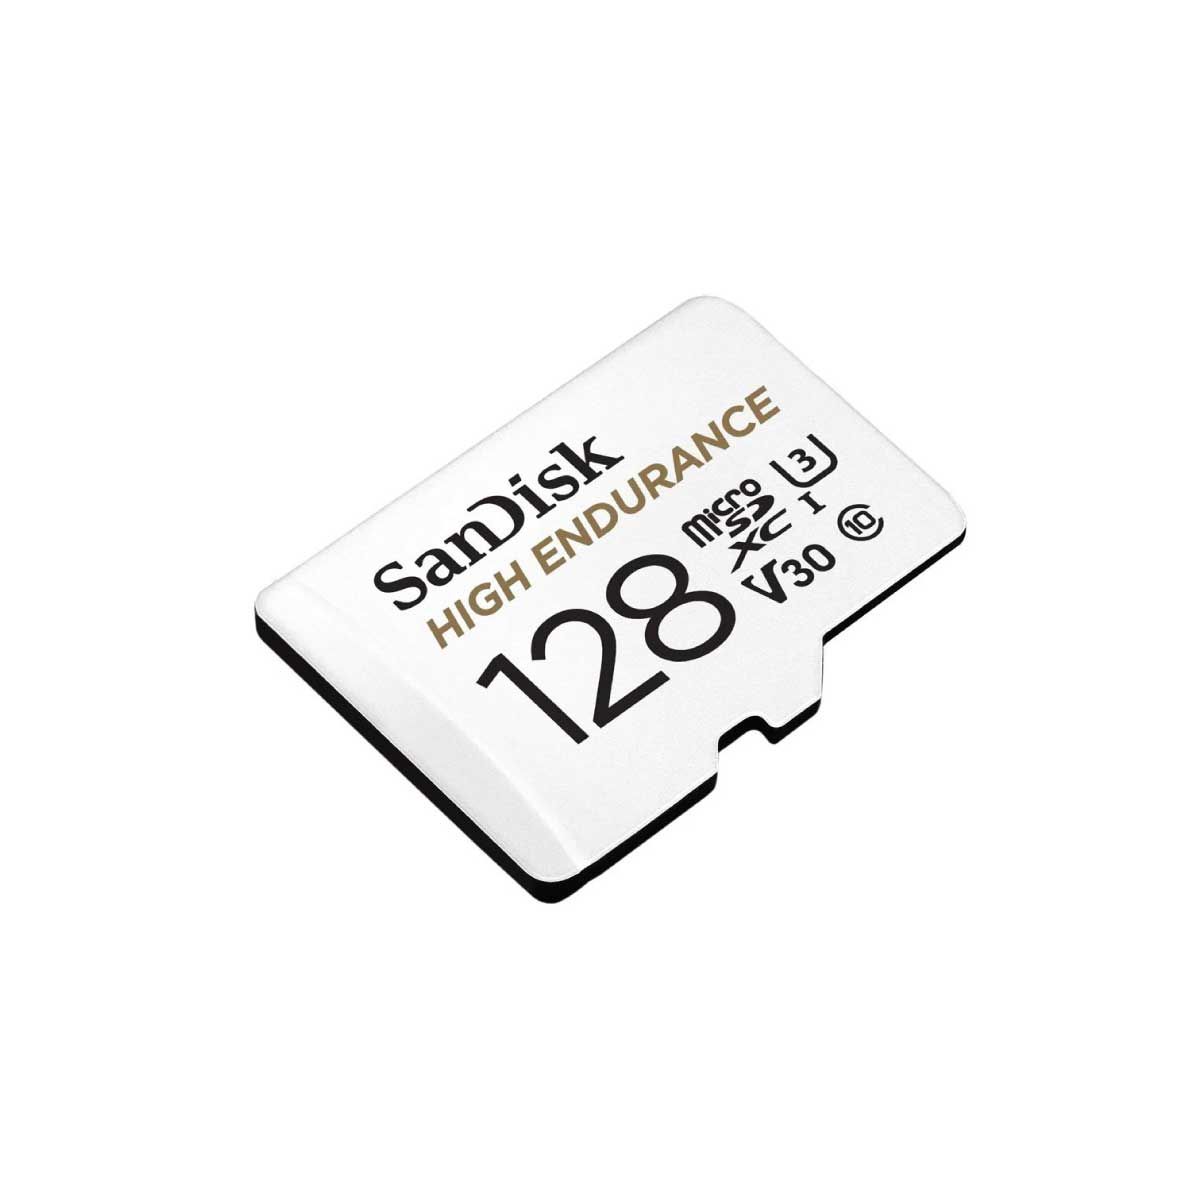 SANDISK MICRO SD CARD 128 GB รุ่น SDSQQNR128G_GN6IA (SDSQQNR-128G-GN6IA)